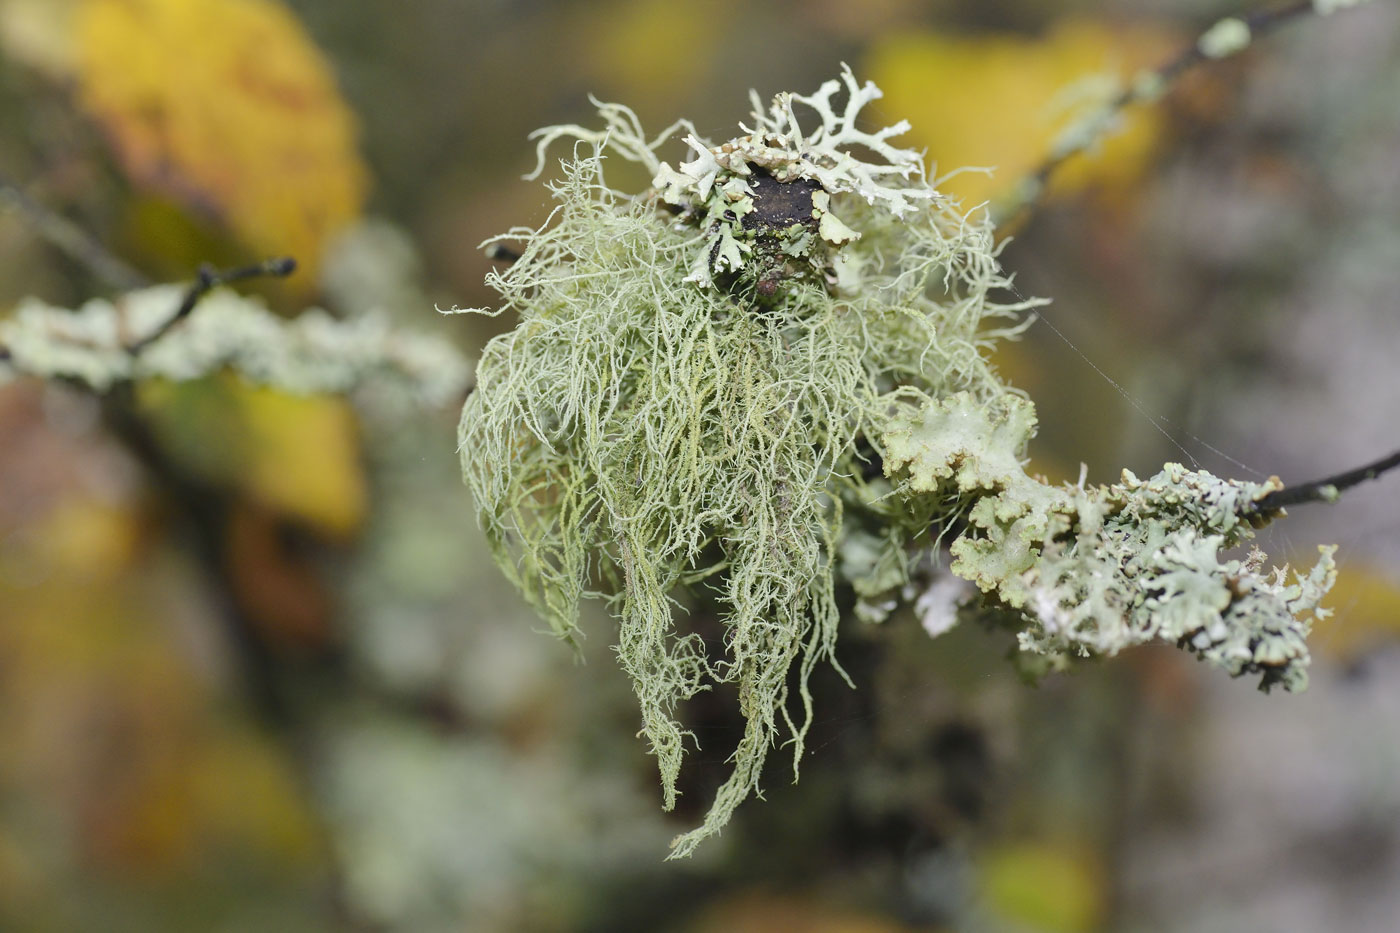 usnea lichen growing on branch